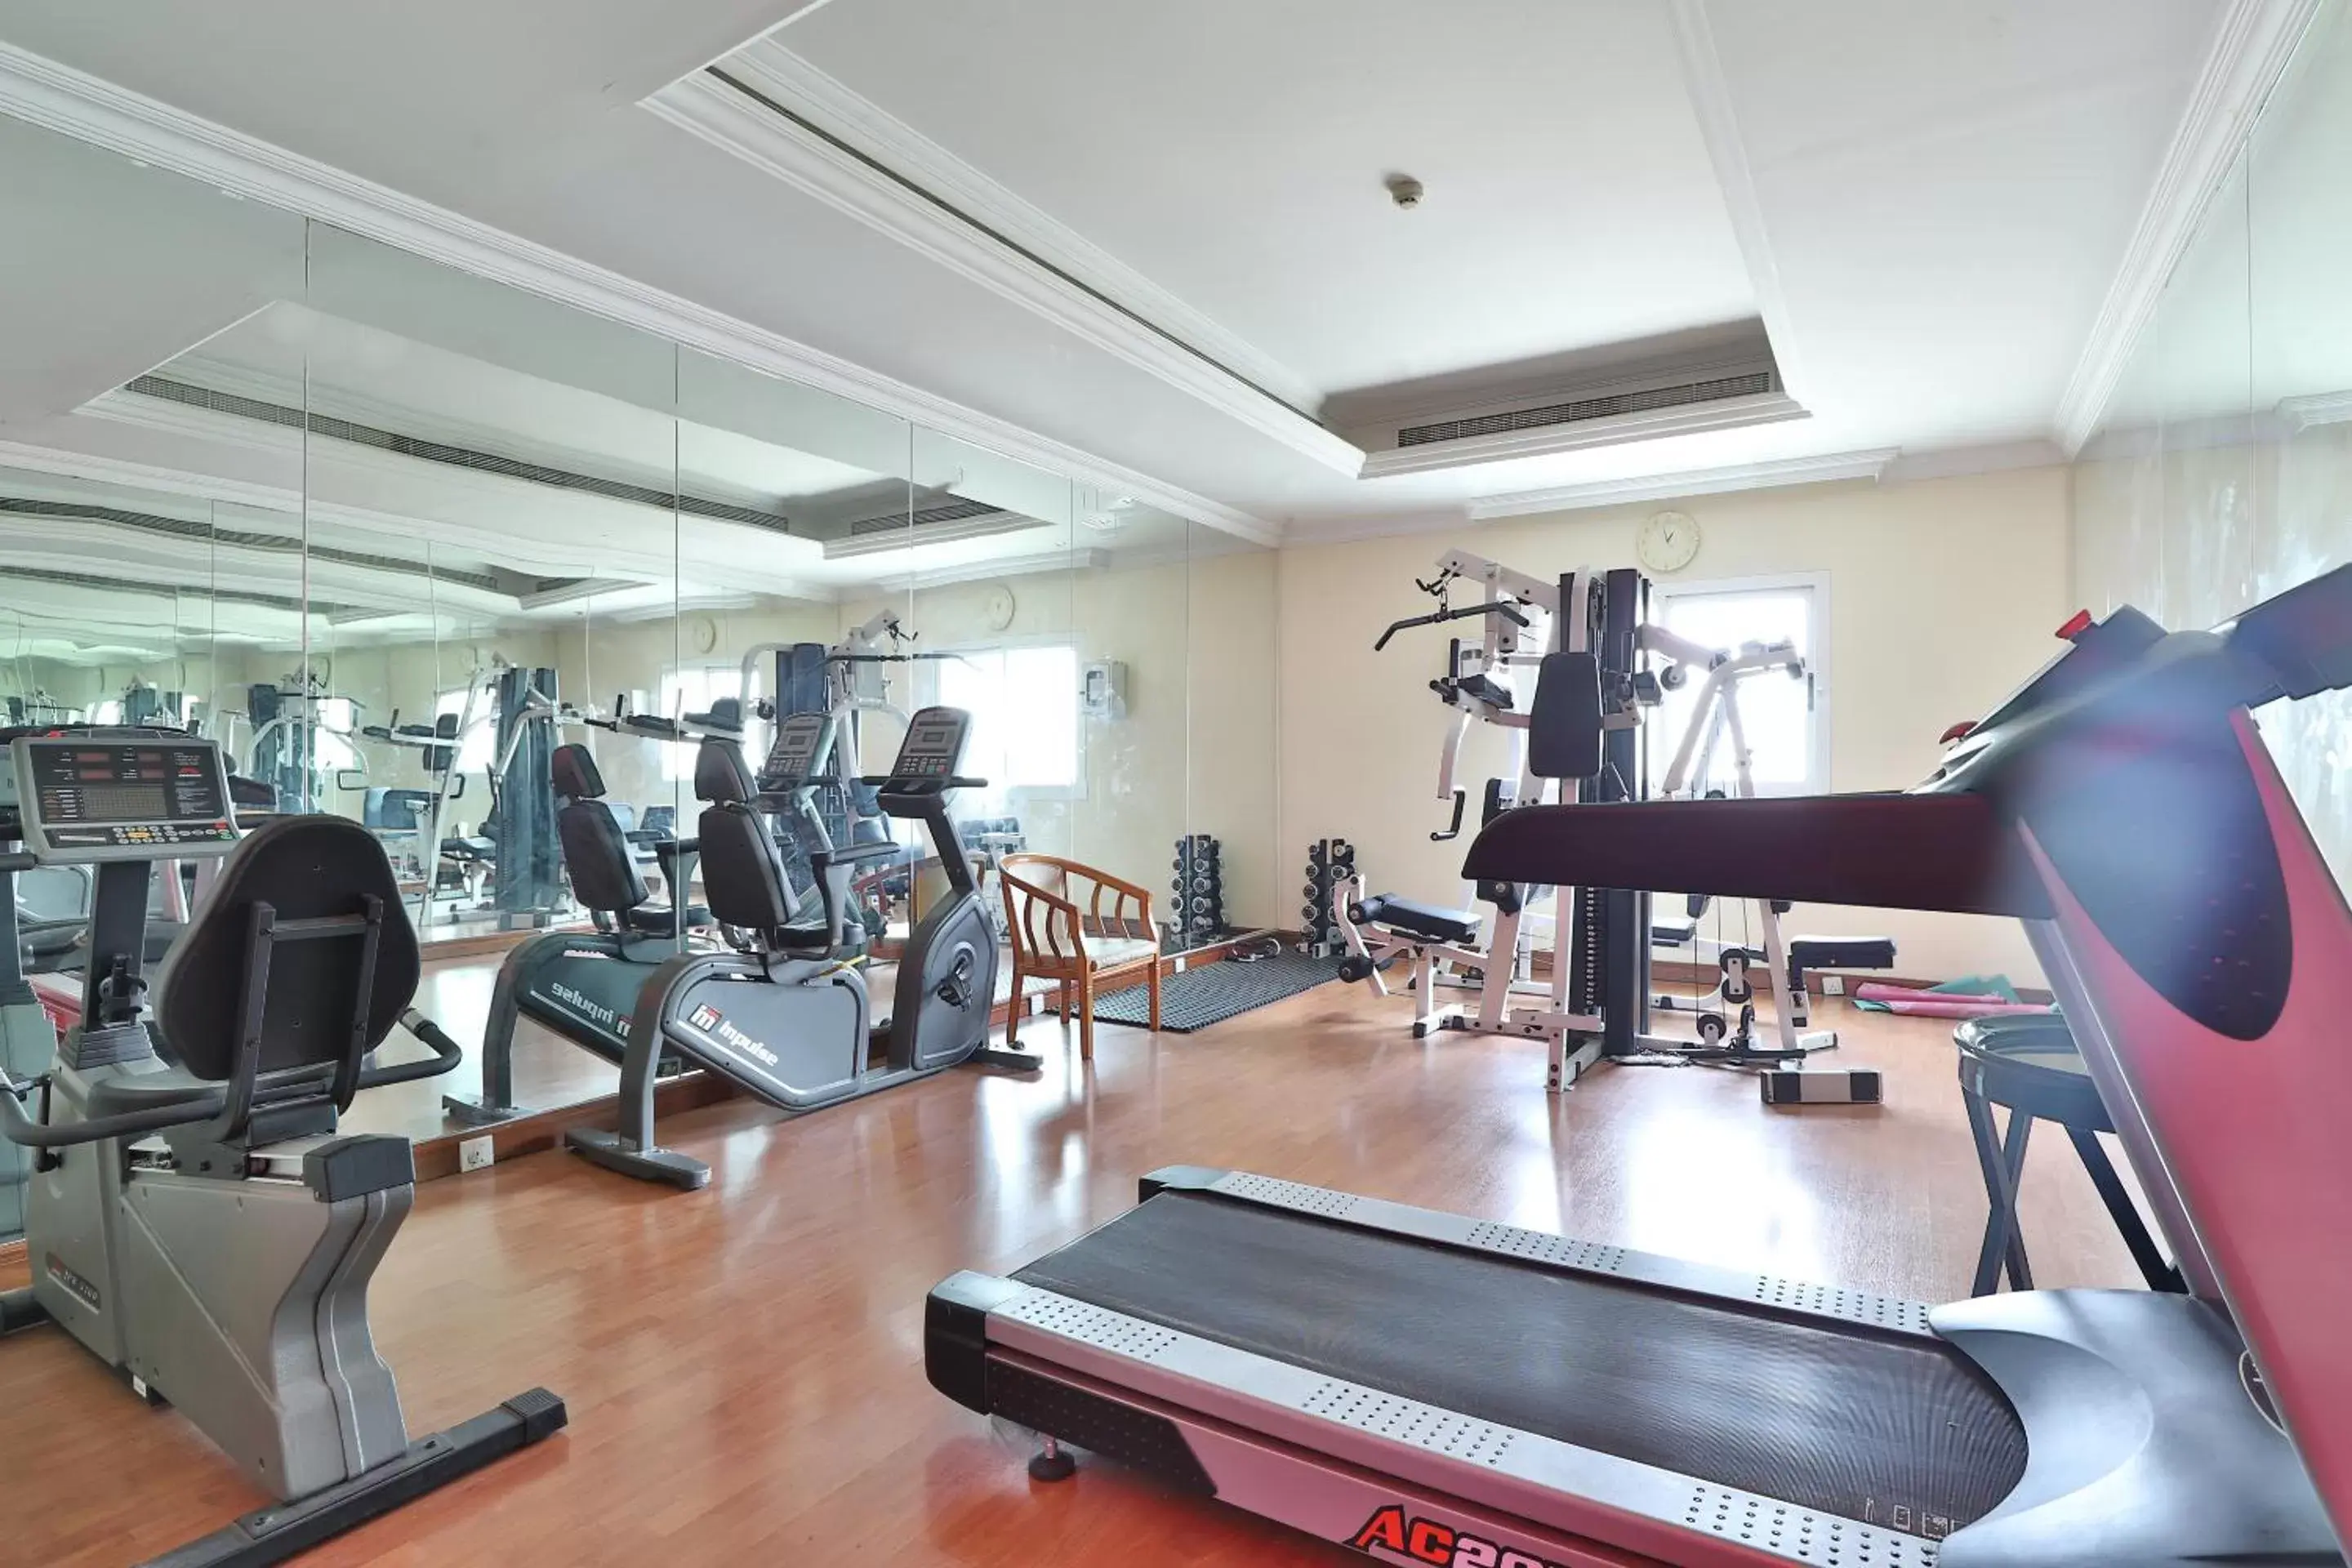 Fitness centre/facilities, Fitness Center/Facilities in Moon Valley Hotel Apartment - Bur Dubai, Burjuman